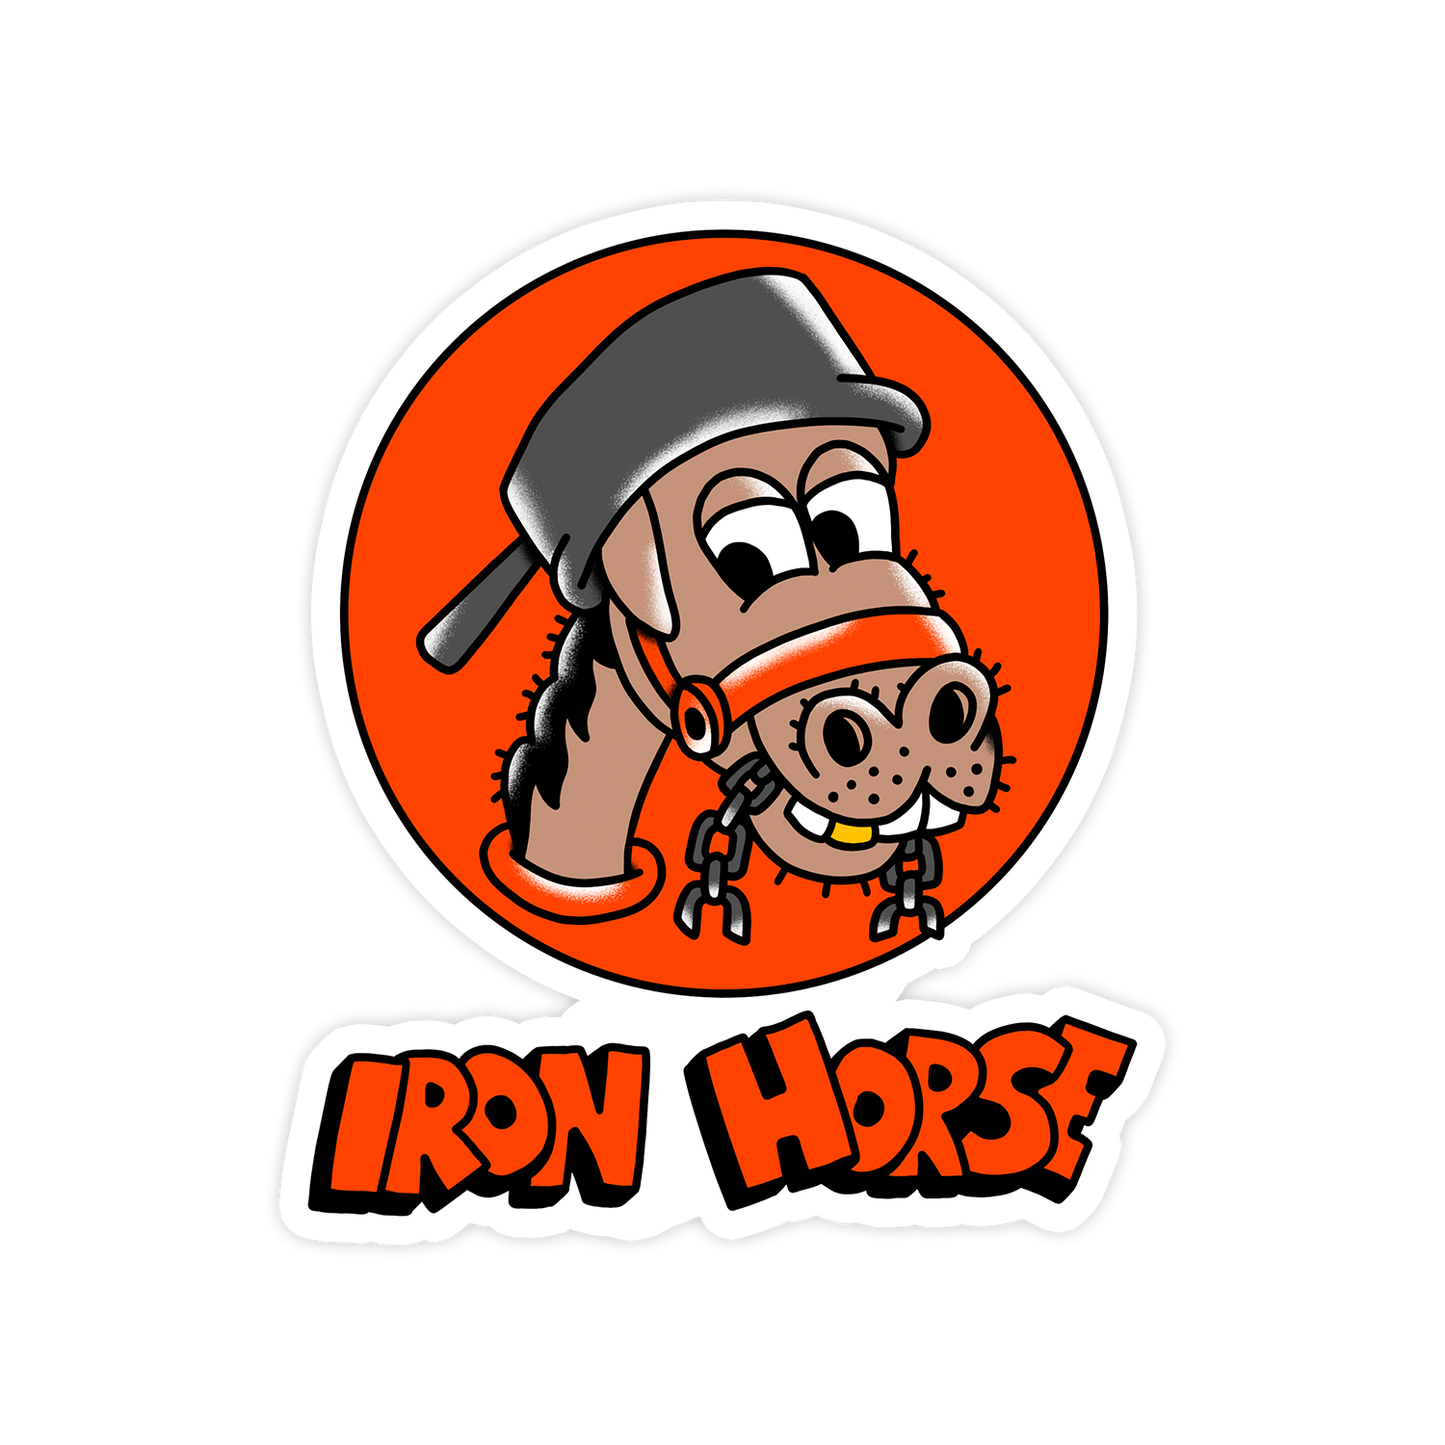 Iron Horse Sticker